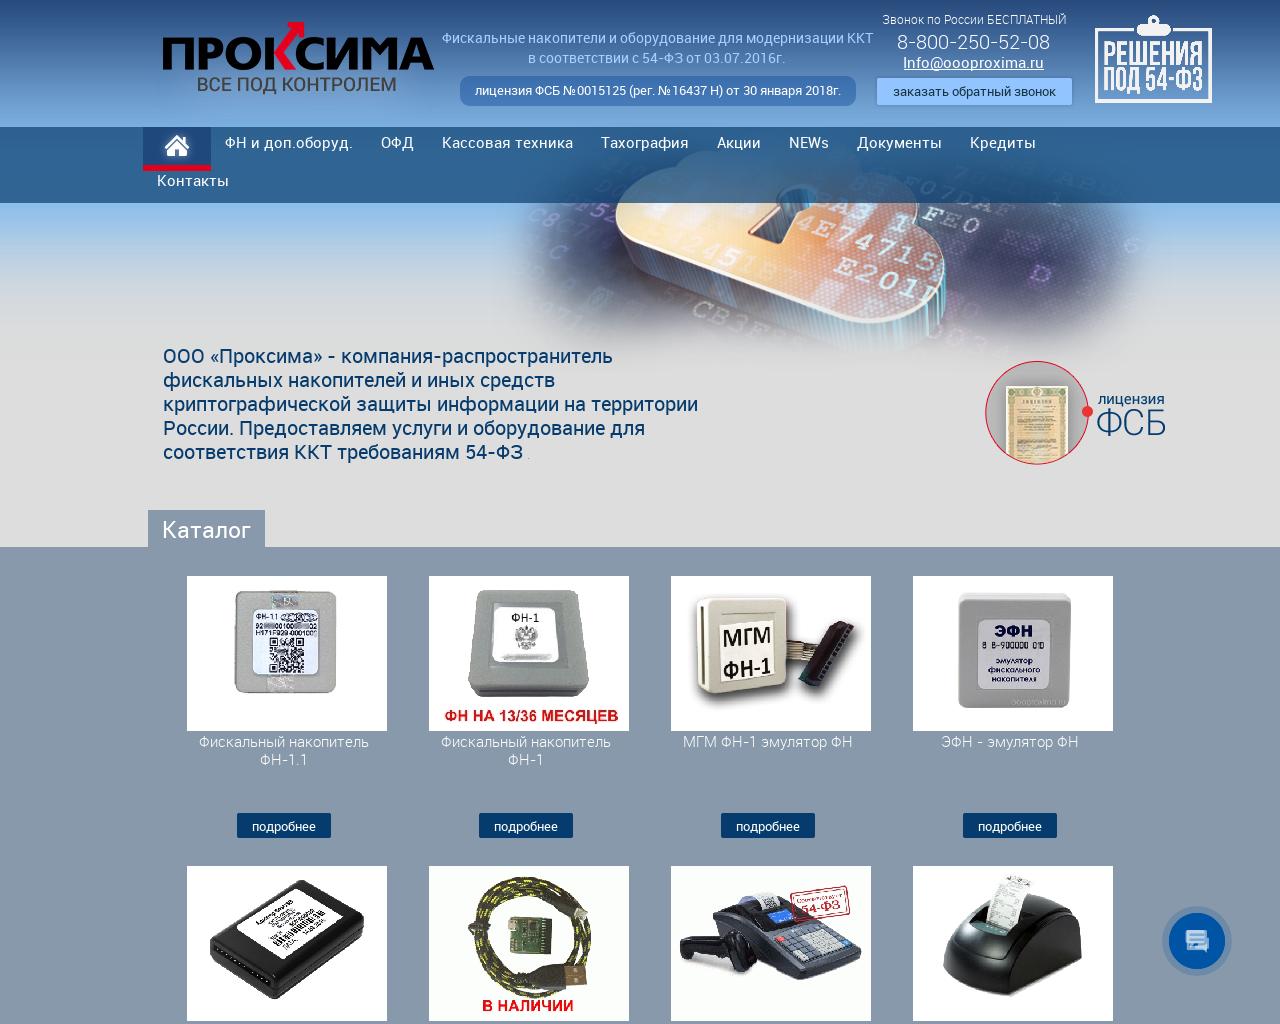 Изображение сайта oooproxima.ru в разрешении 1280x1024